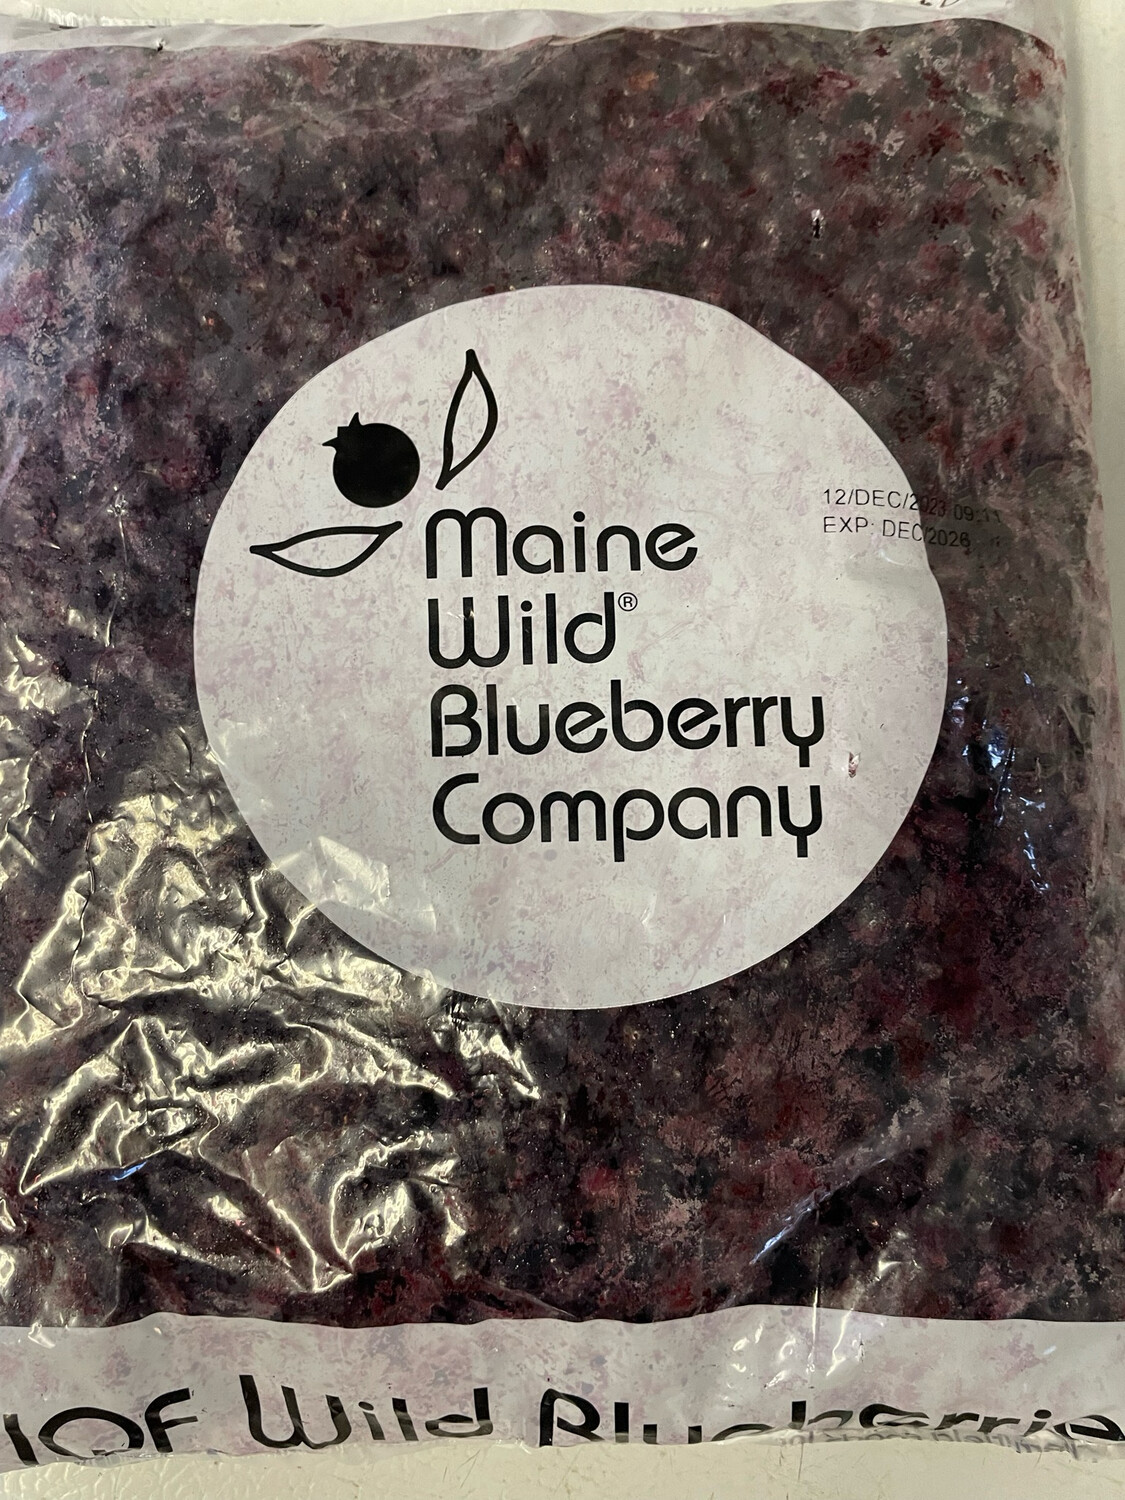 Frozen Blueberries
(*LIMIT 1 per household*)